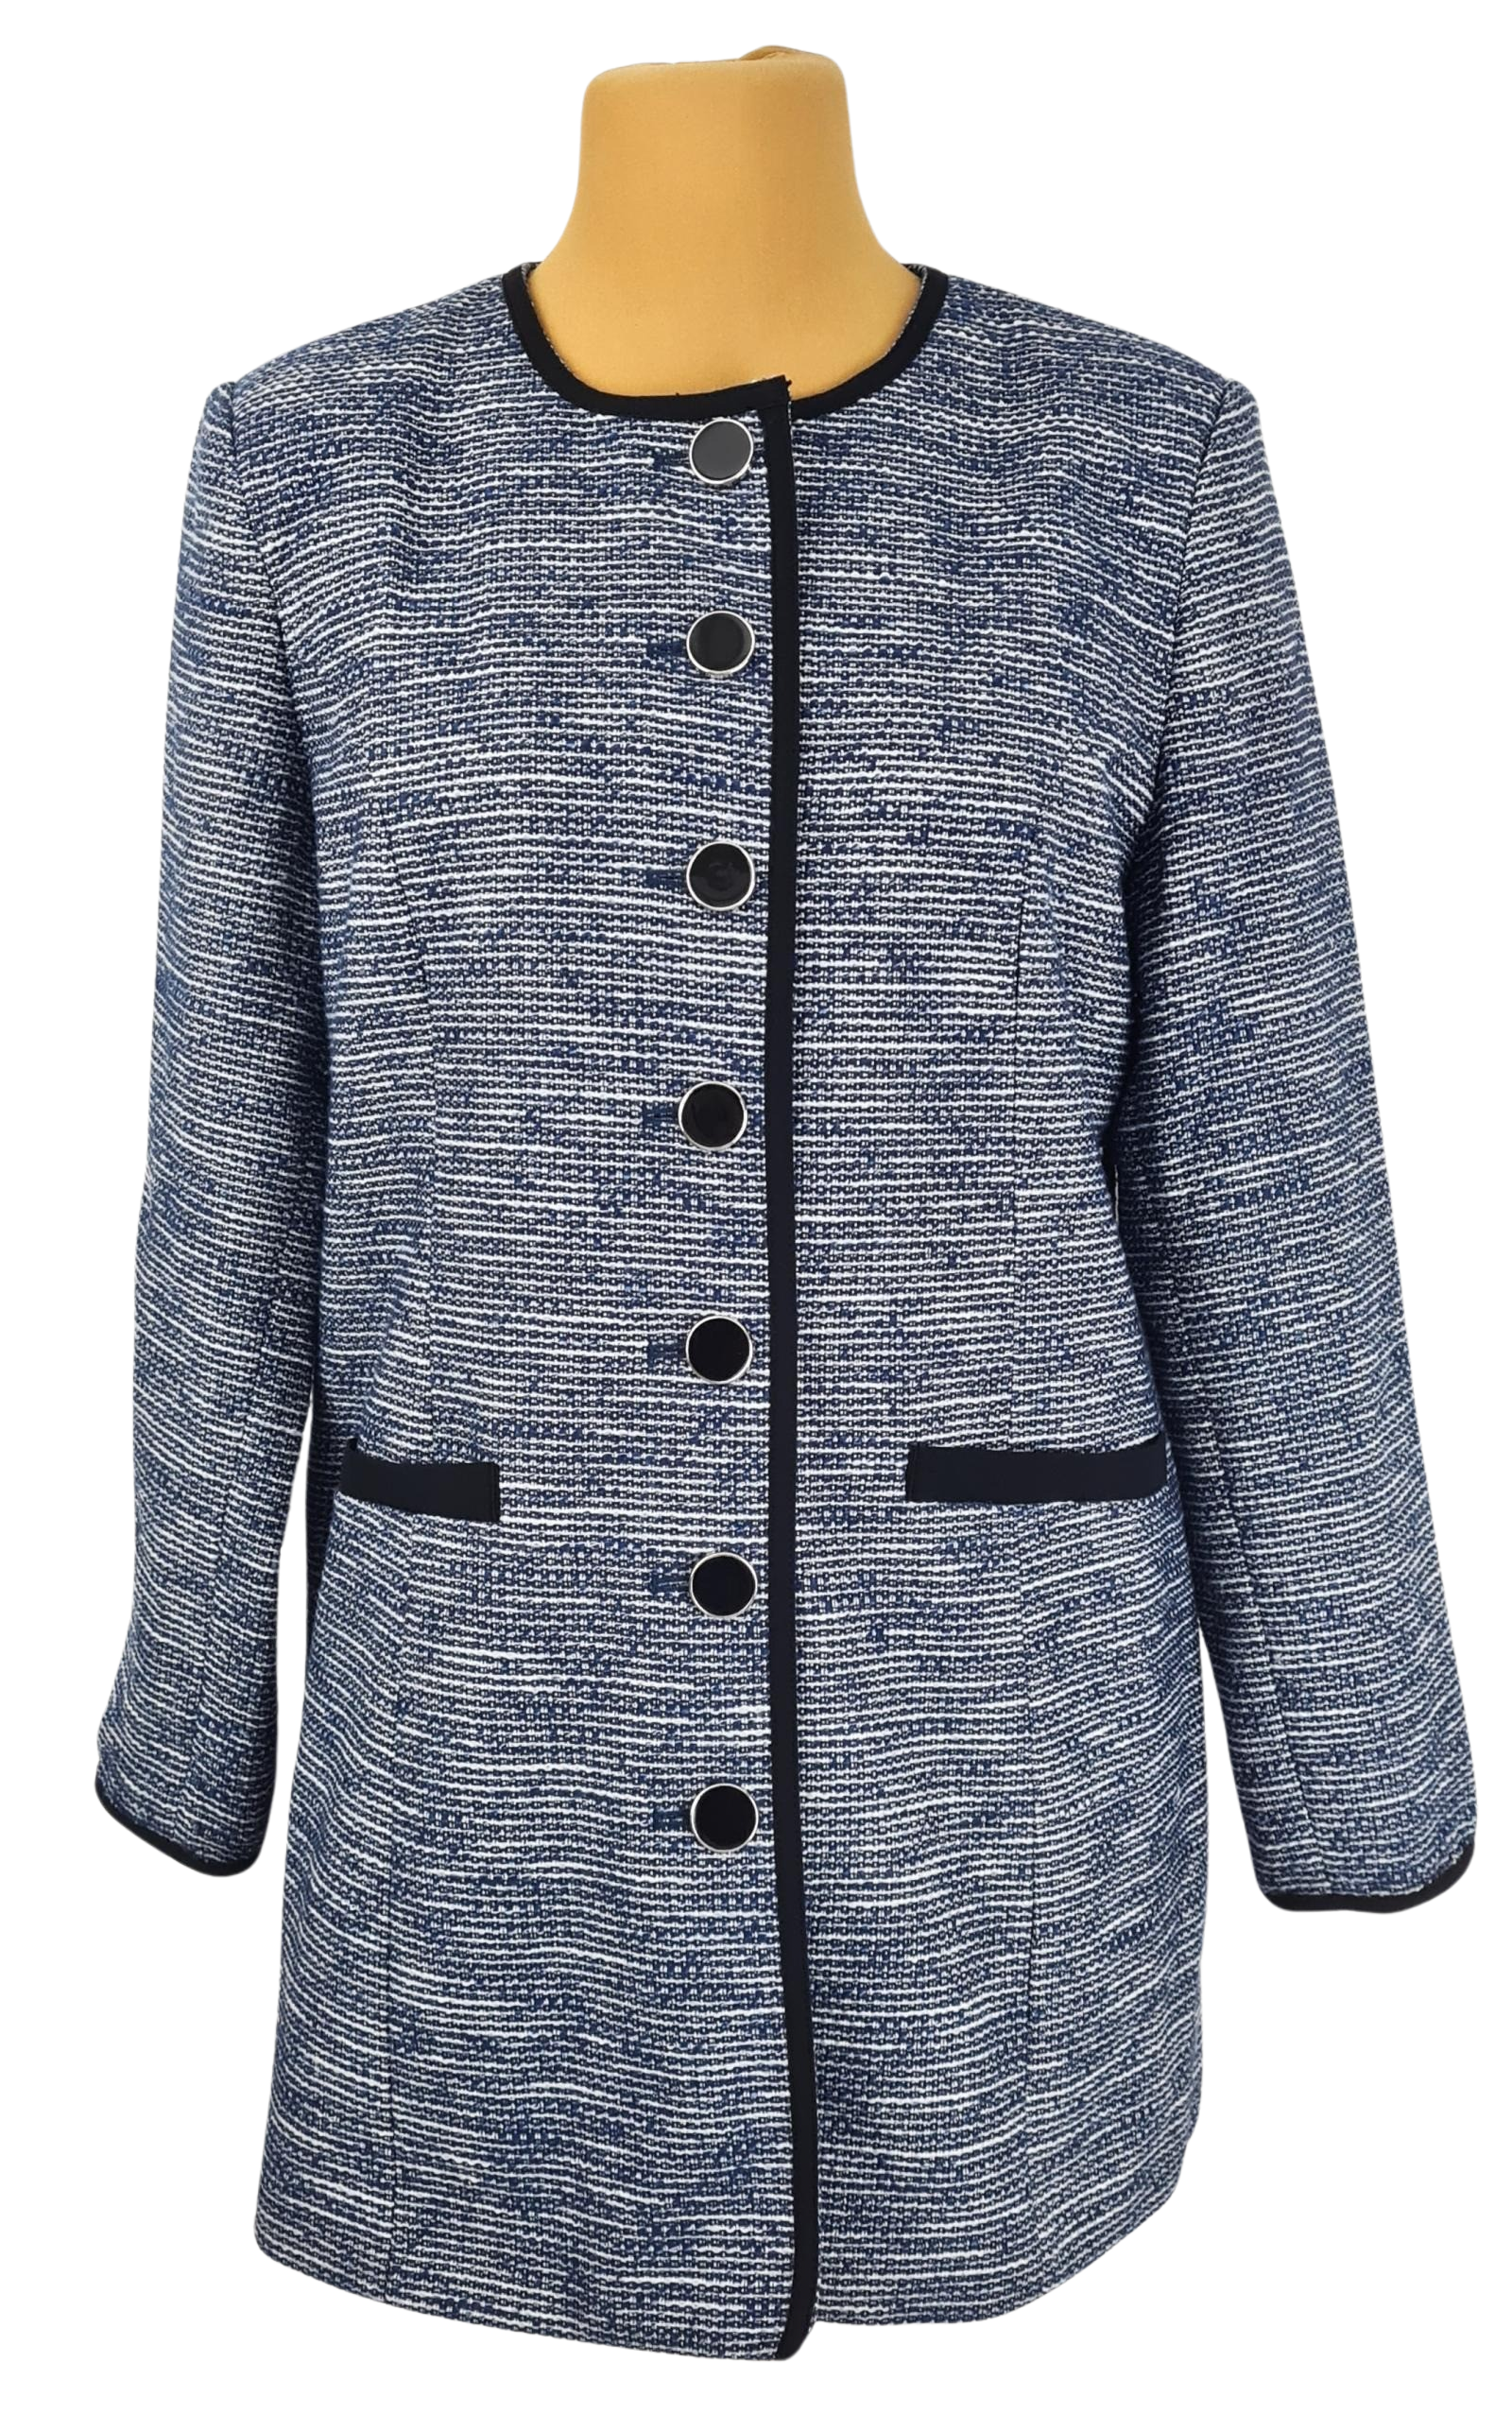 Dannimac kék-fehér női alkalmi kabát